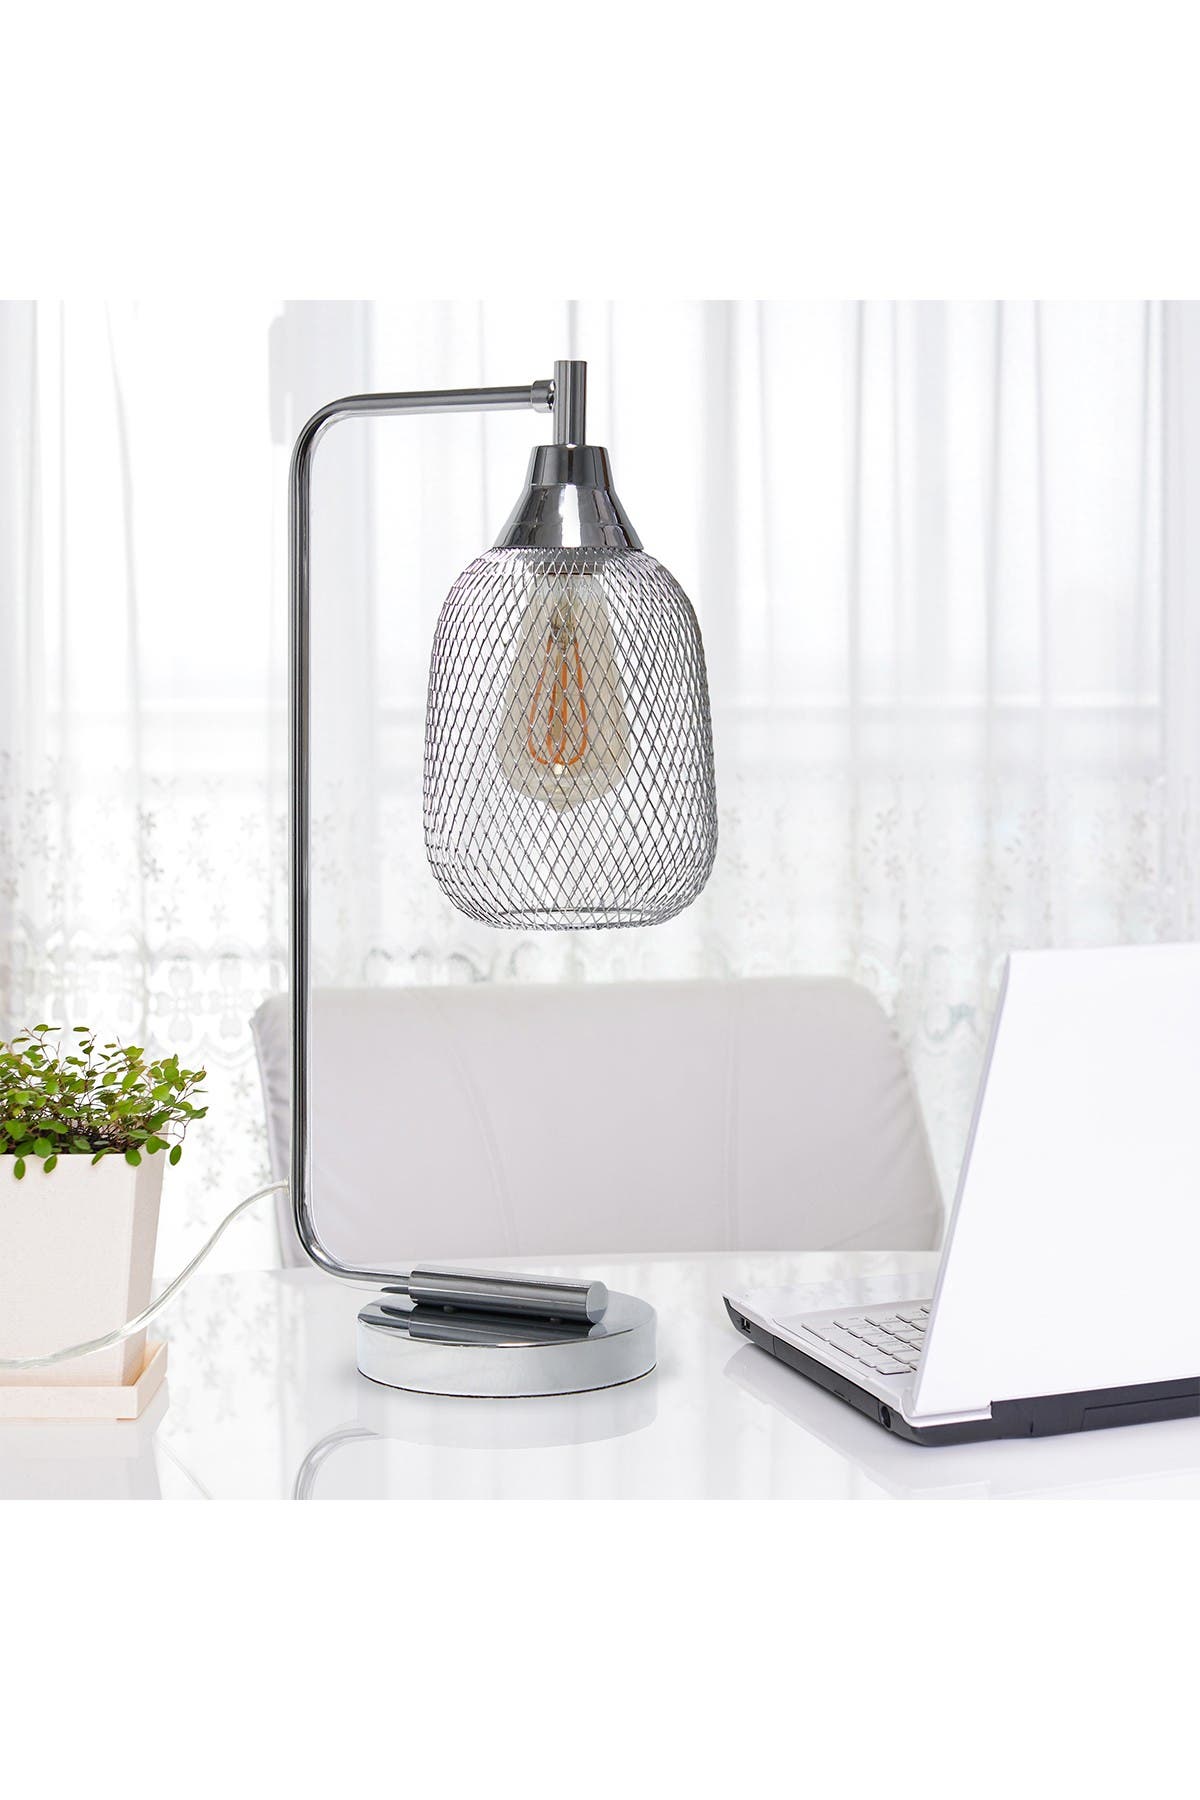 Lalia Home Industrial Mesh Desk Lamp In Open Grey20